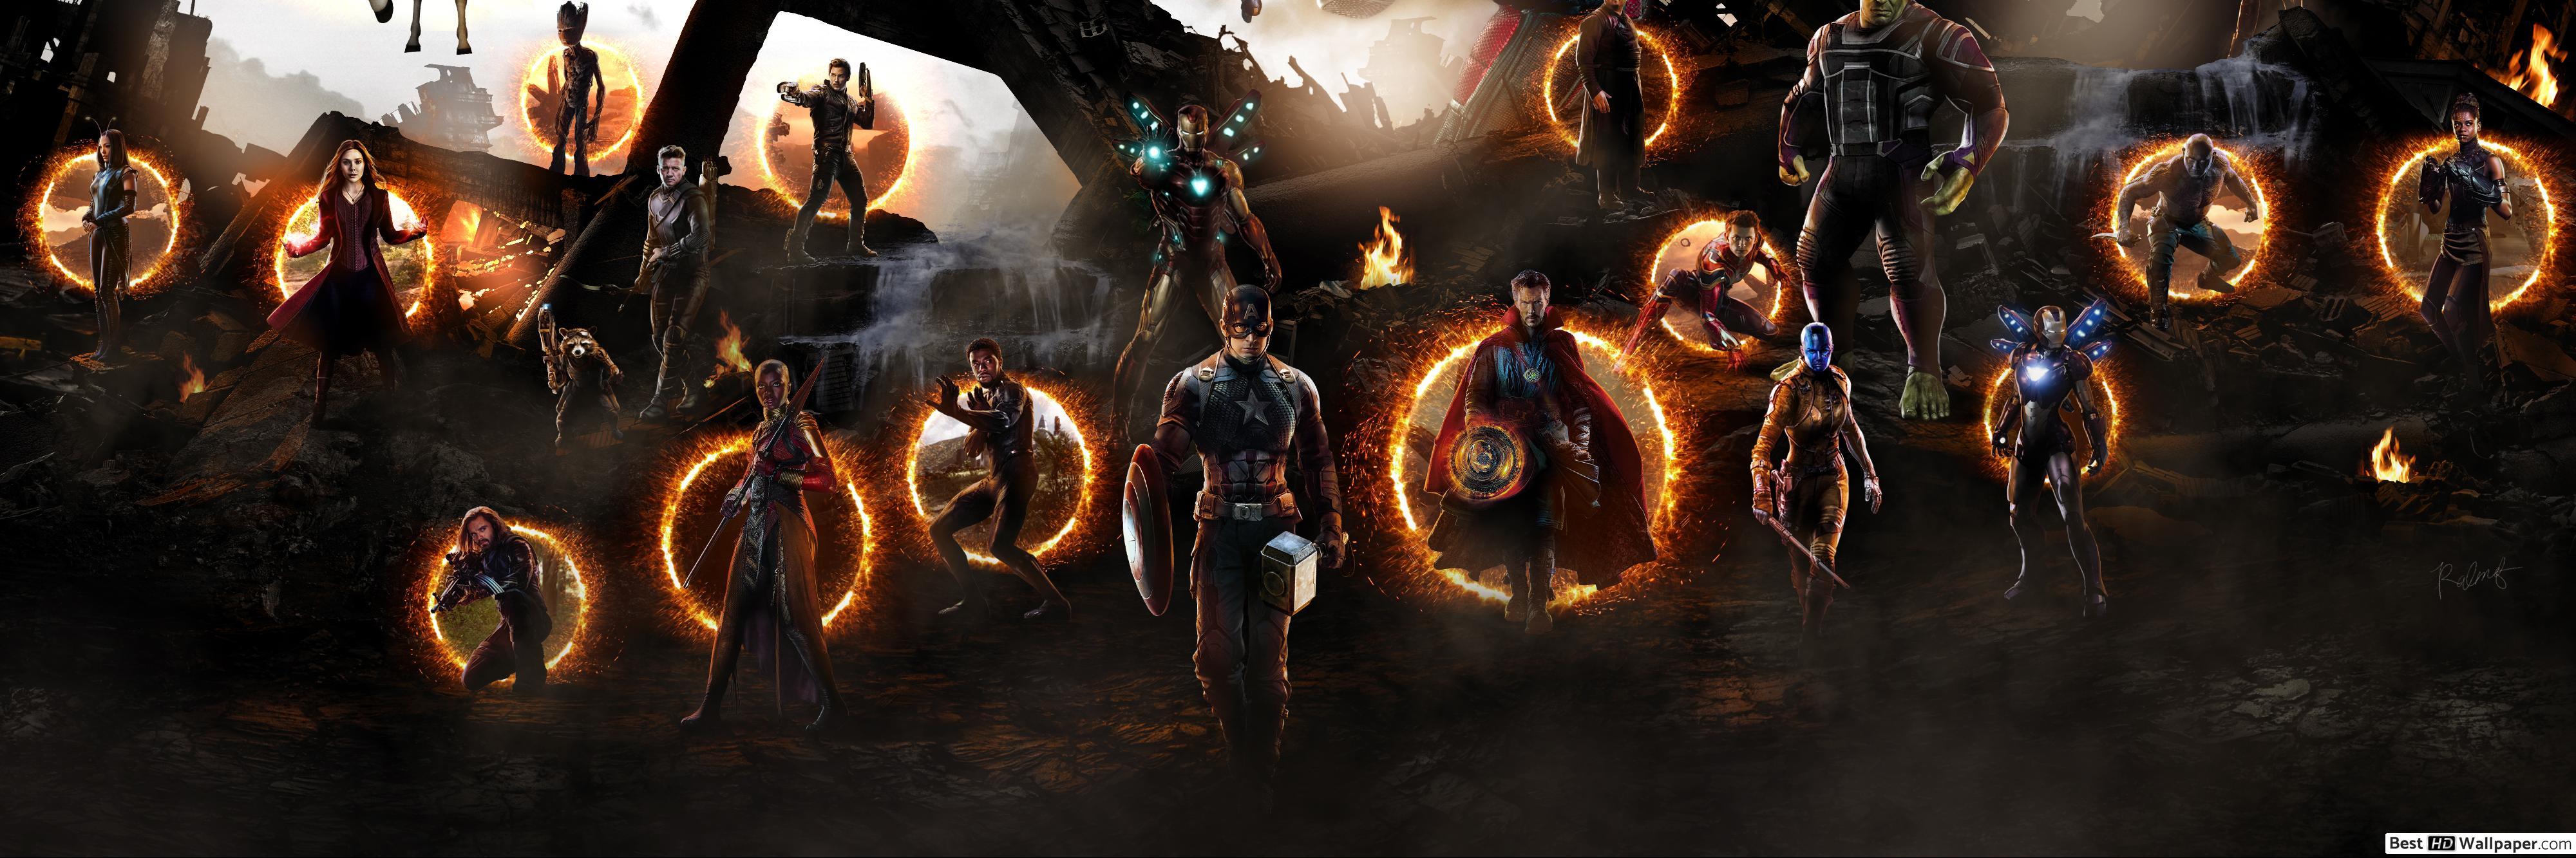 Avengers: Endgame assemble HD wallpaper download